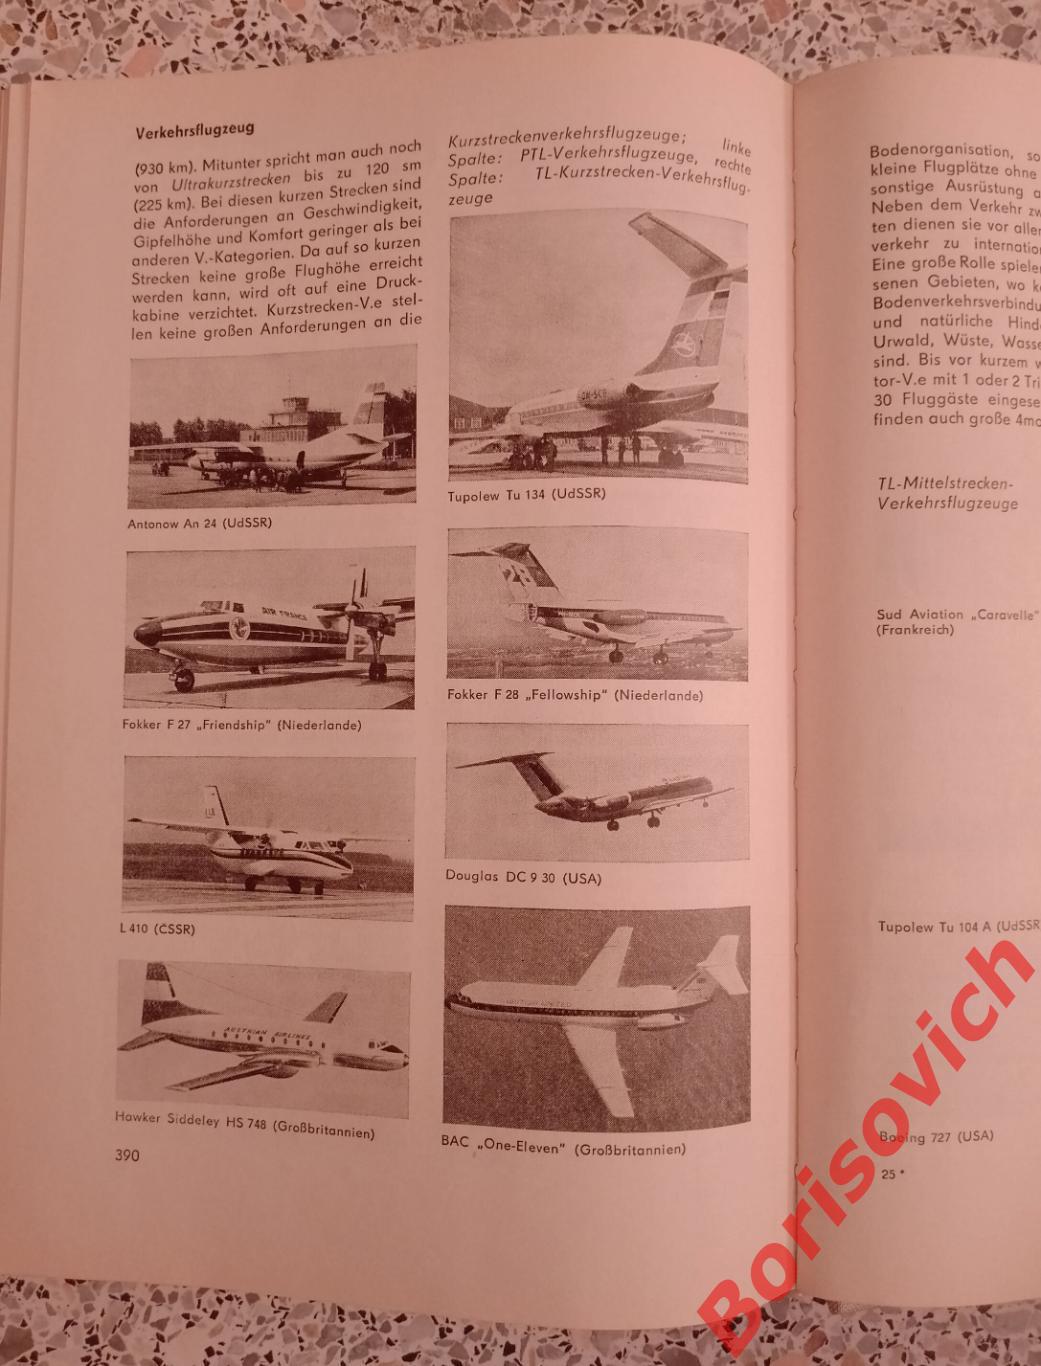 Heinz A. F. Schmidt Lexikon Luftfahrt ЭНЦИКЛОПЕДИЯ АВИАЦИИ 1971 Берлин 418 стр 4